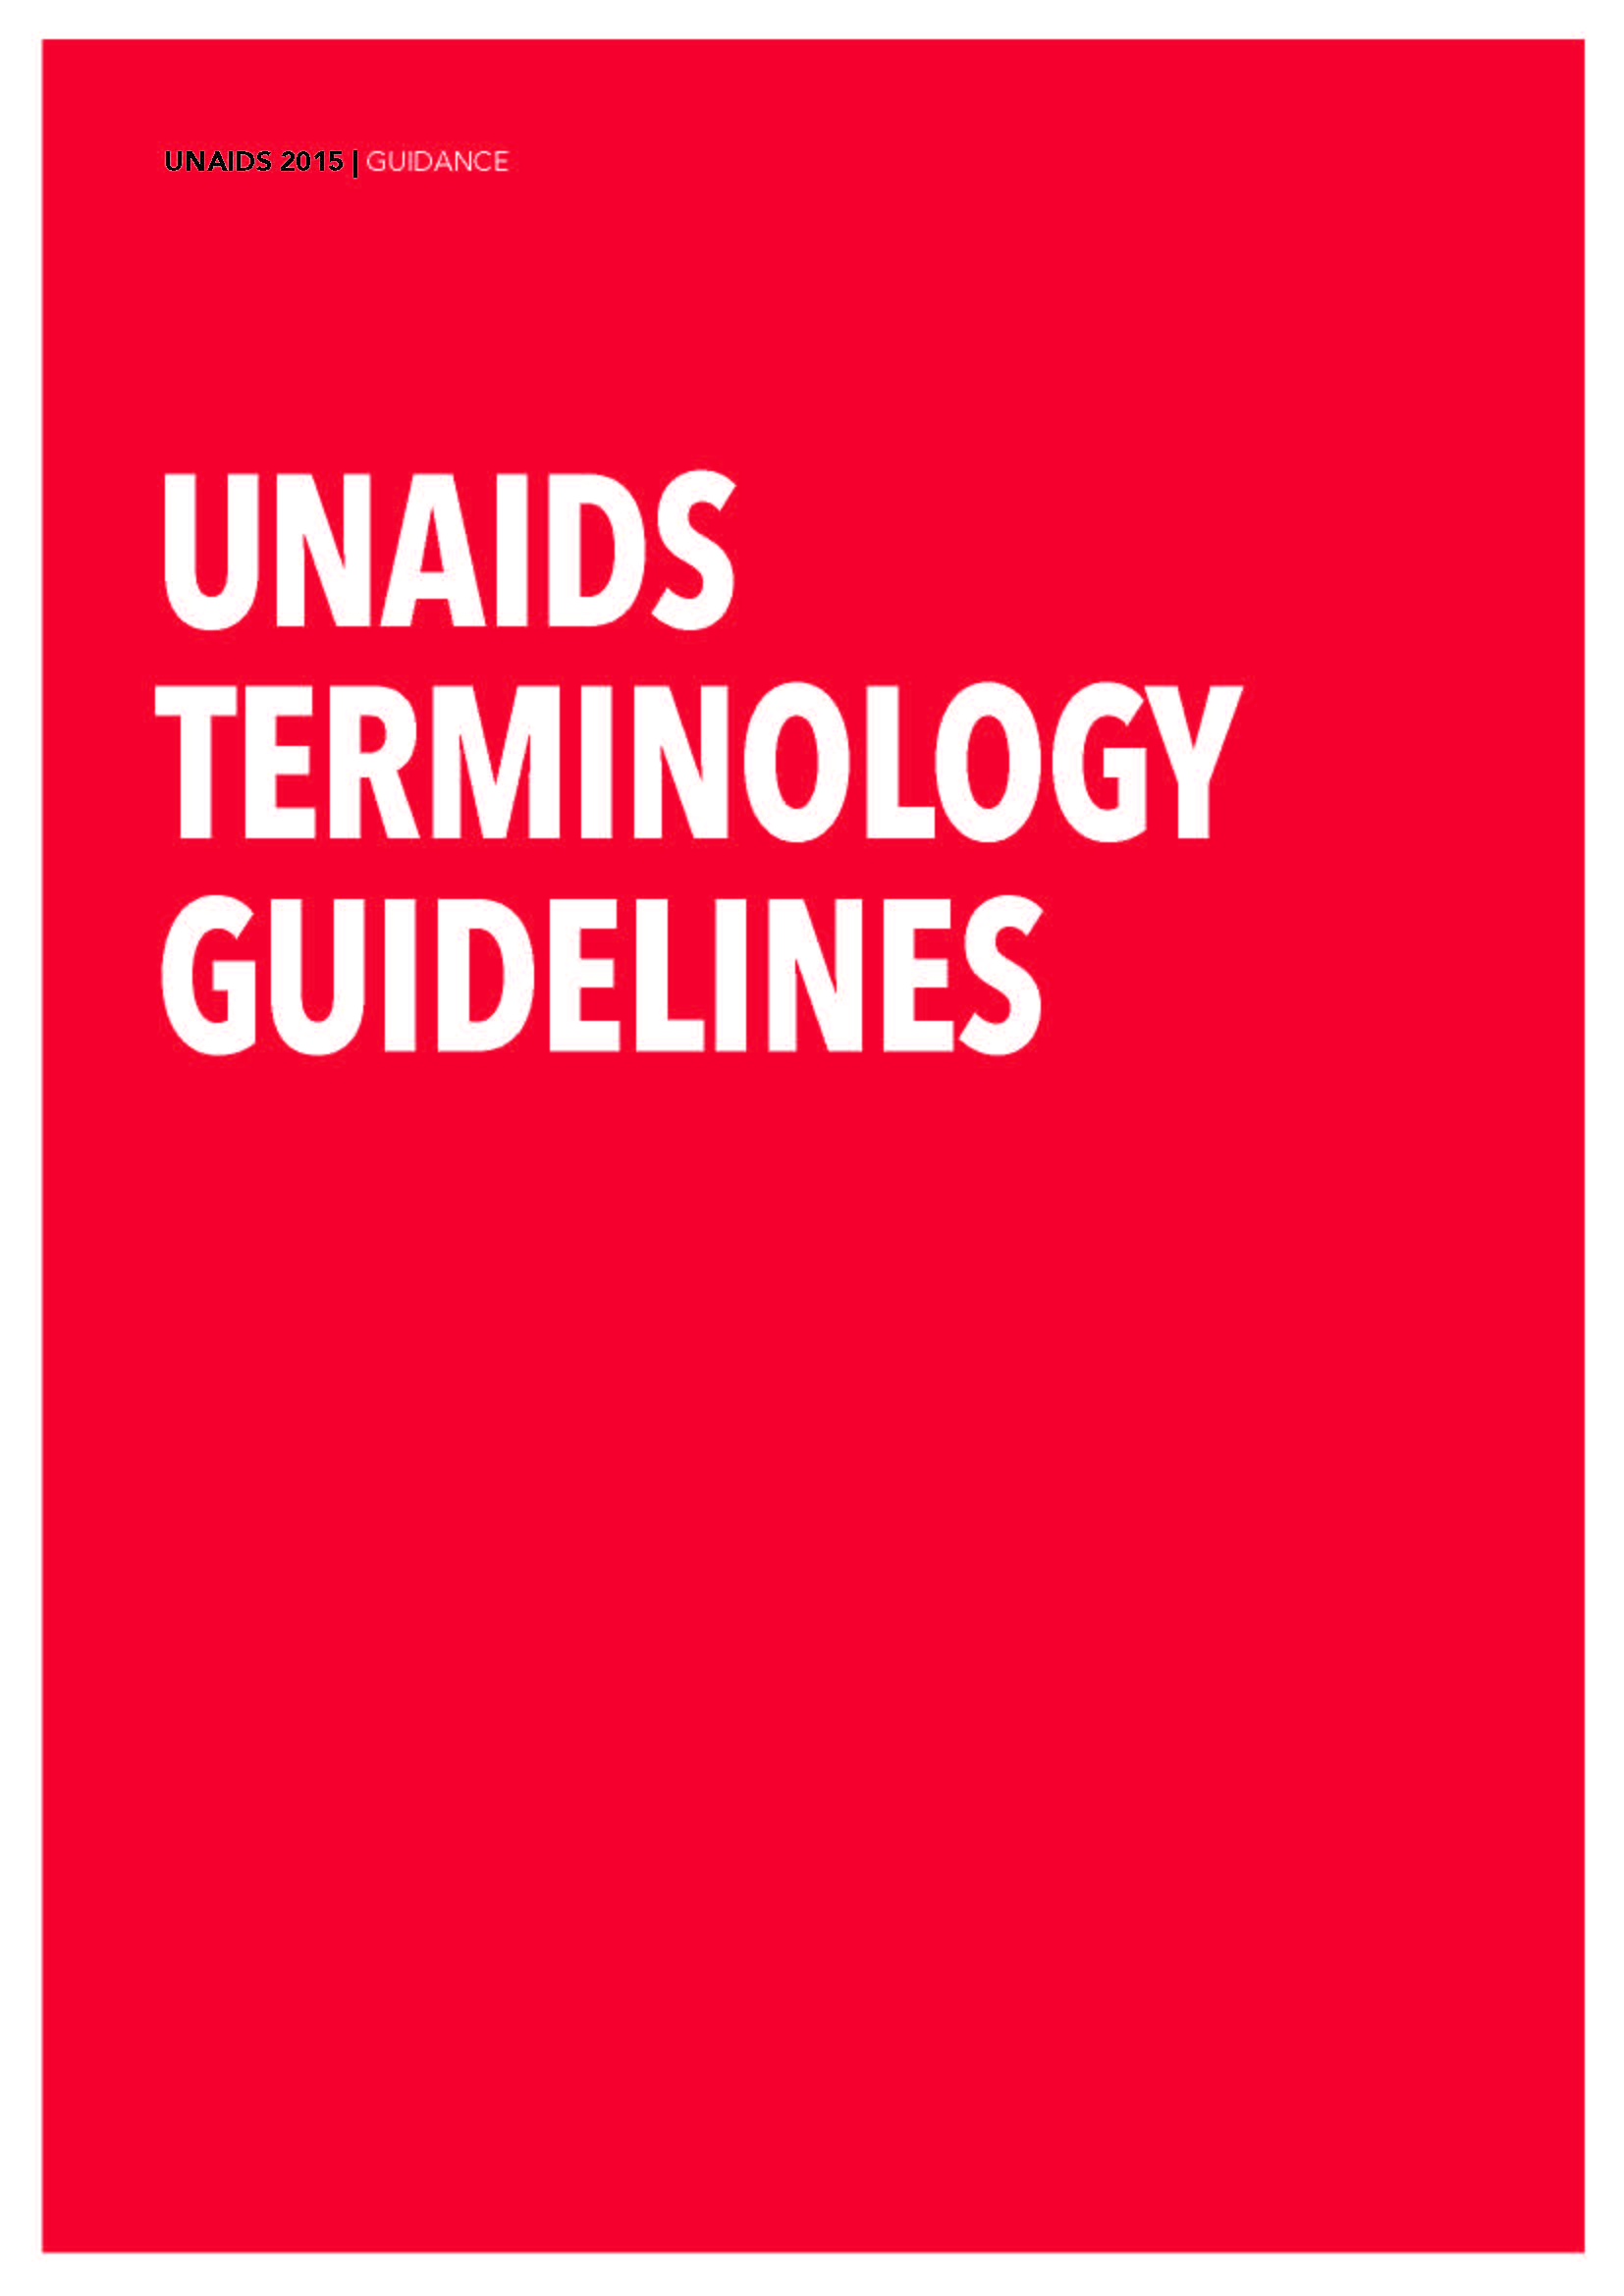 UNAIDS Terminology Guidelines Updates